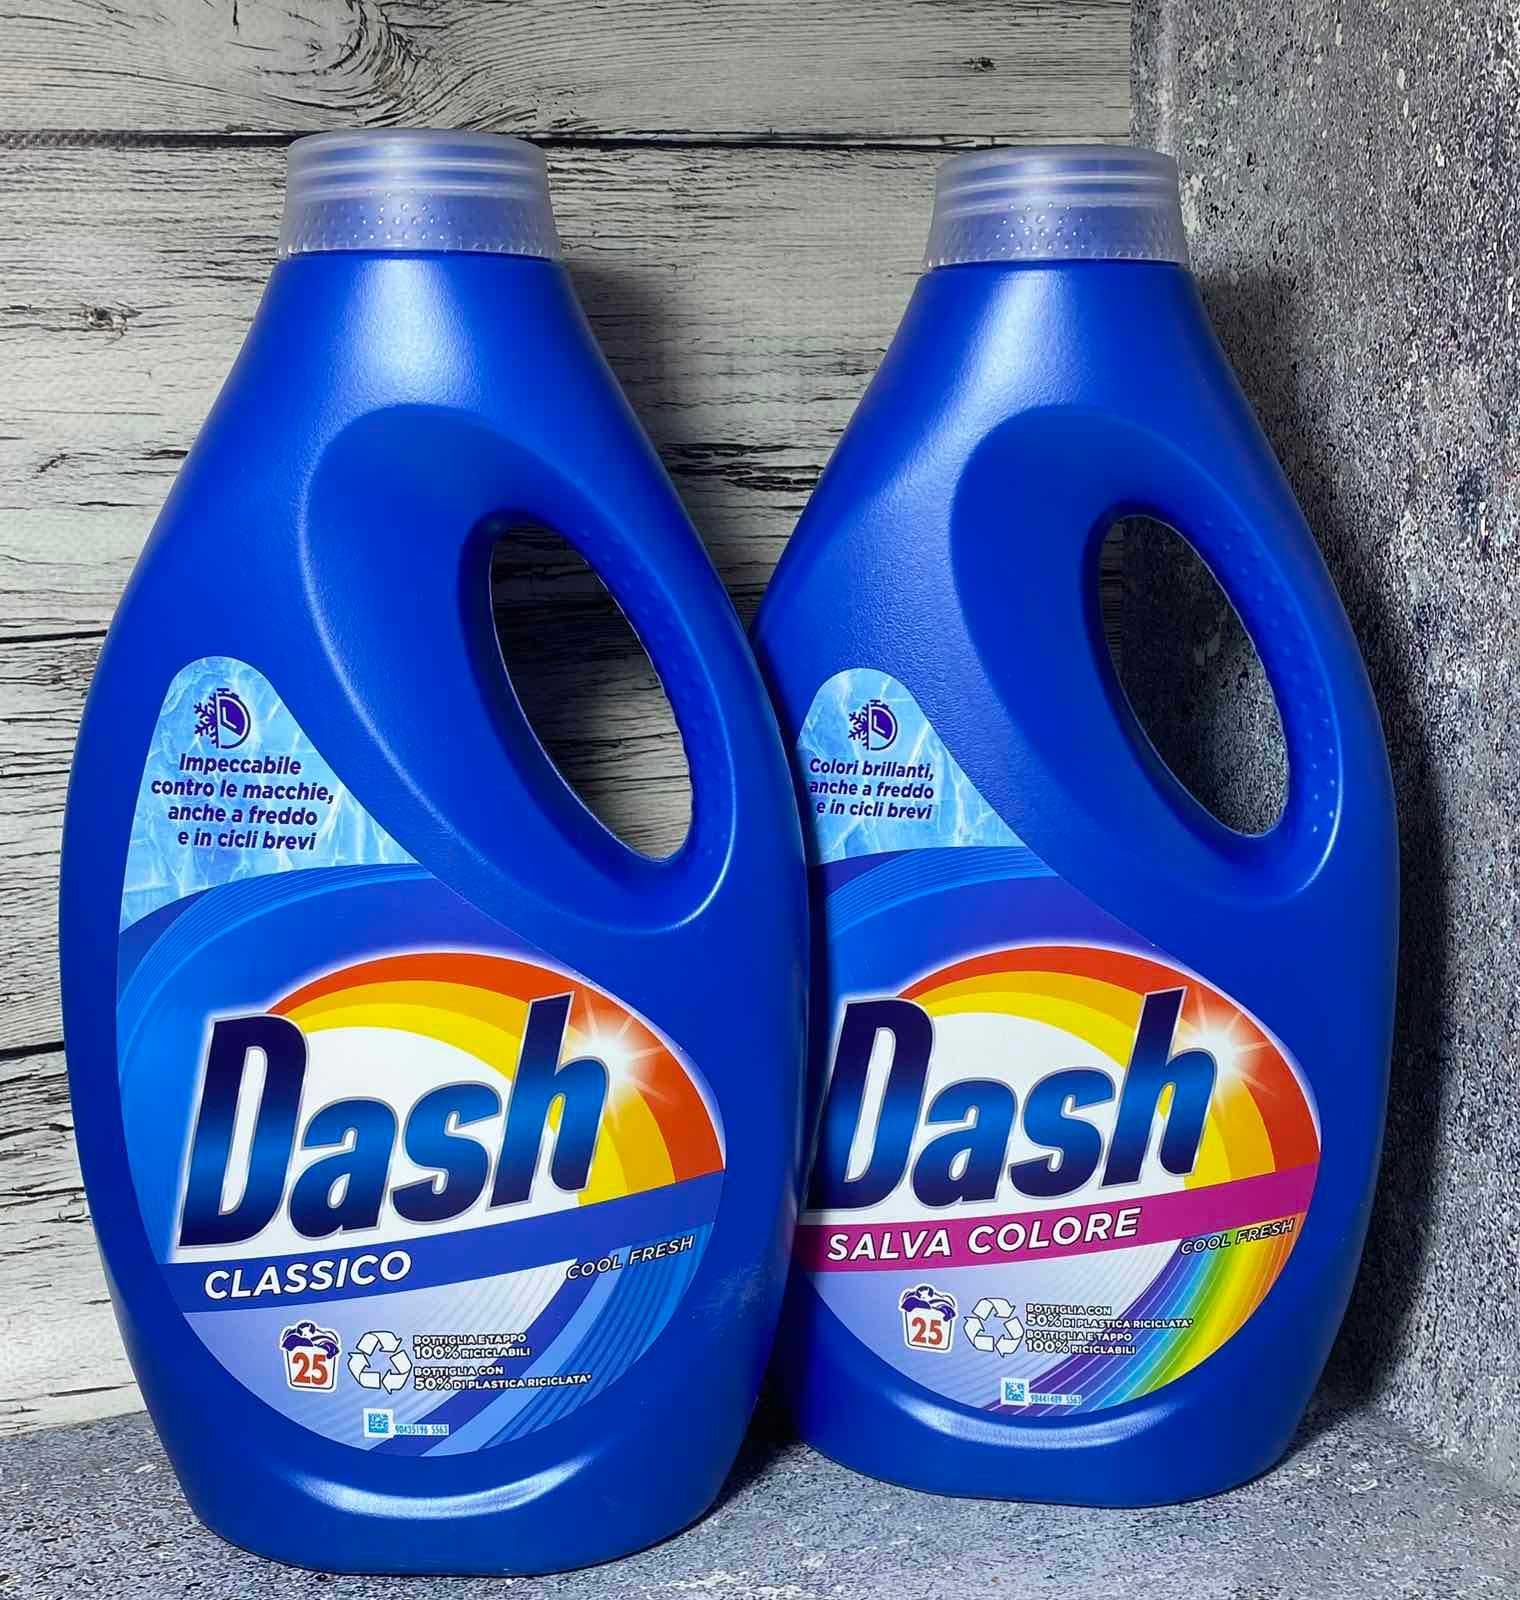 Гель для прання Dash,для: класичного,кольорового
25 прань